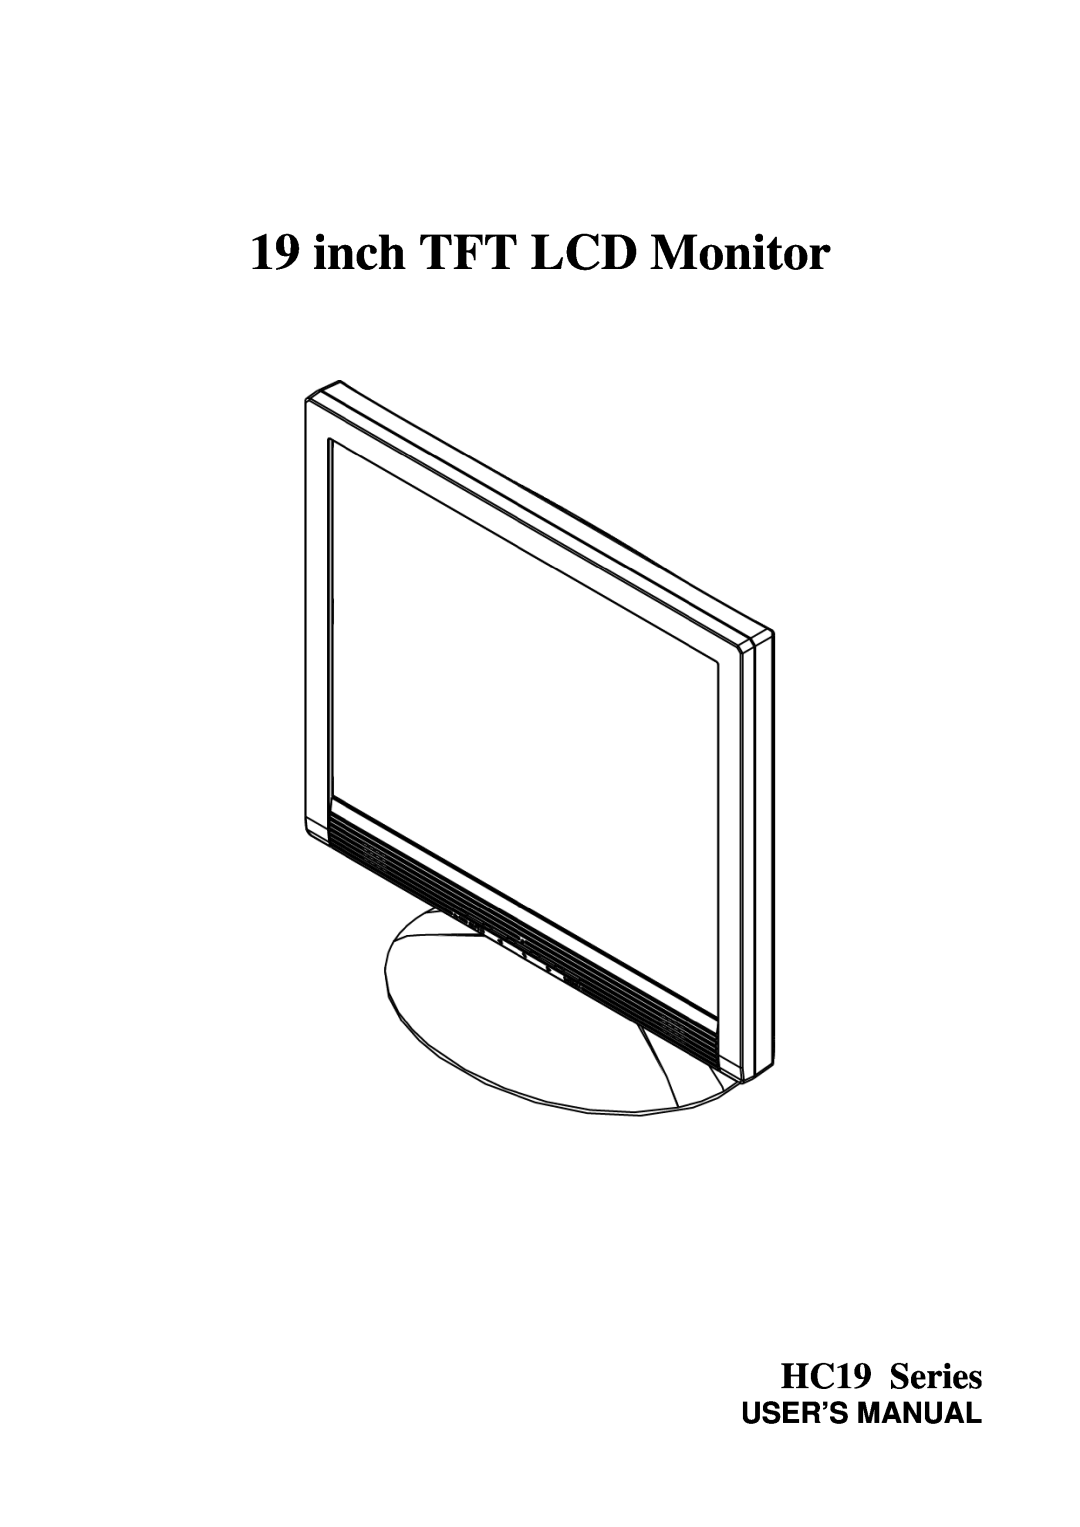 Hanns.G HC19 Series user manual User’S Manual, inch TFT LCD Monitor 